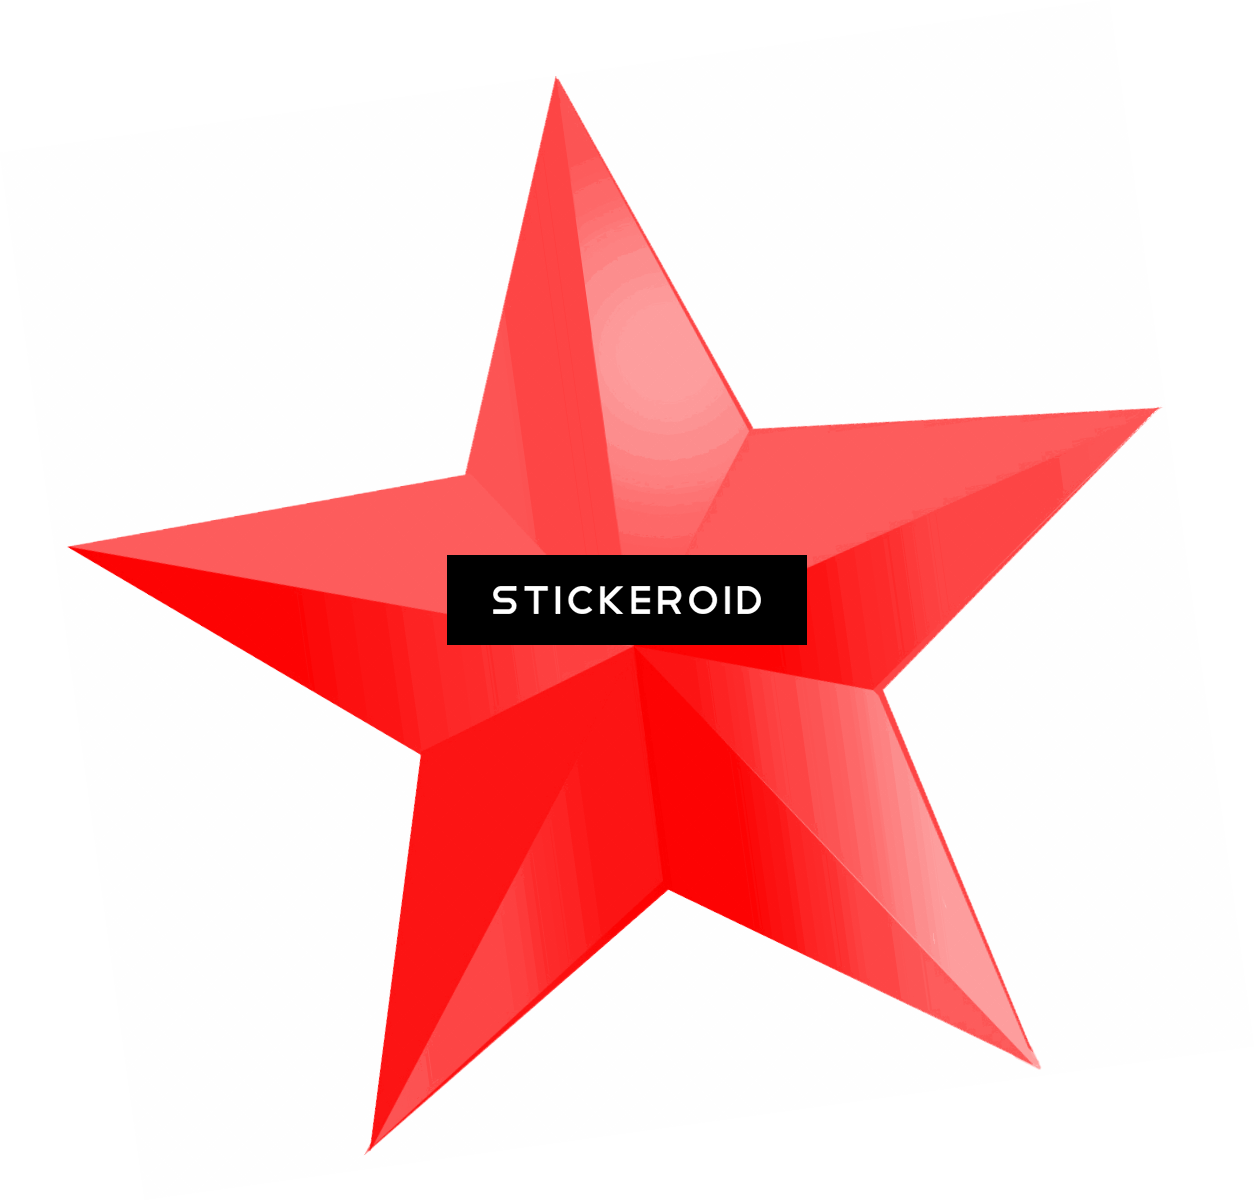 Soviet Red Star Logo - 17 Load20180523 Logo Pngimg004 Red Soviet Star Union.PNG